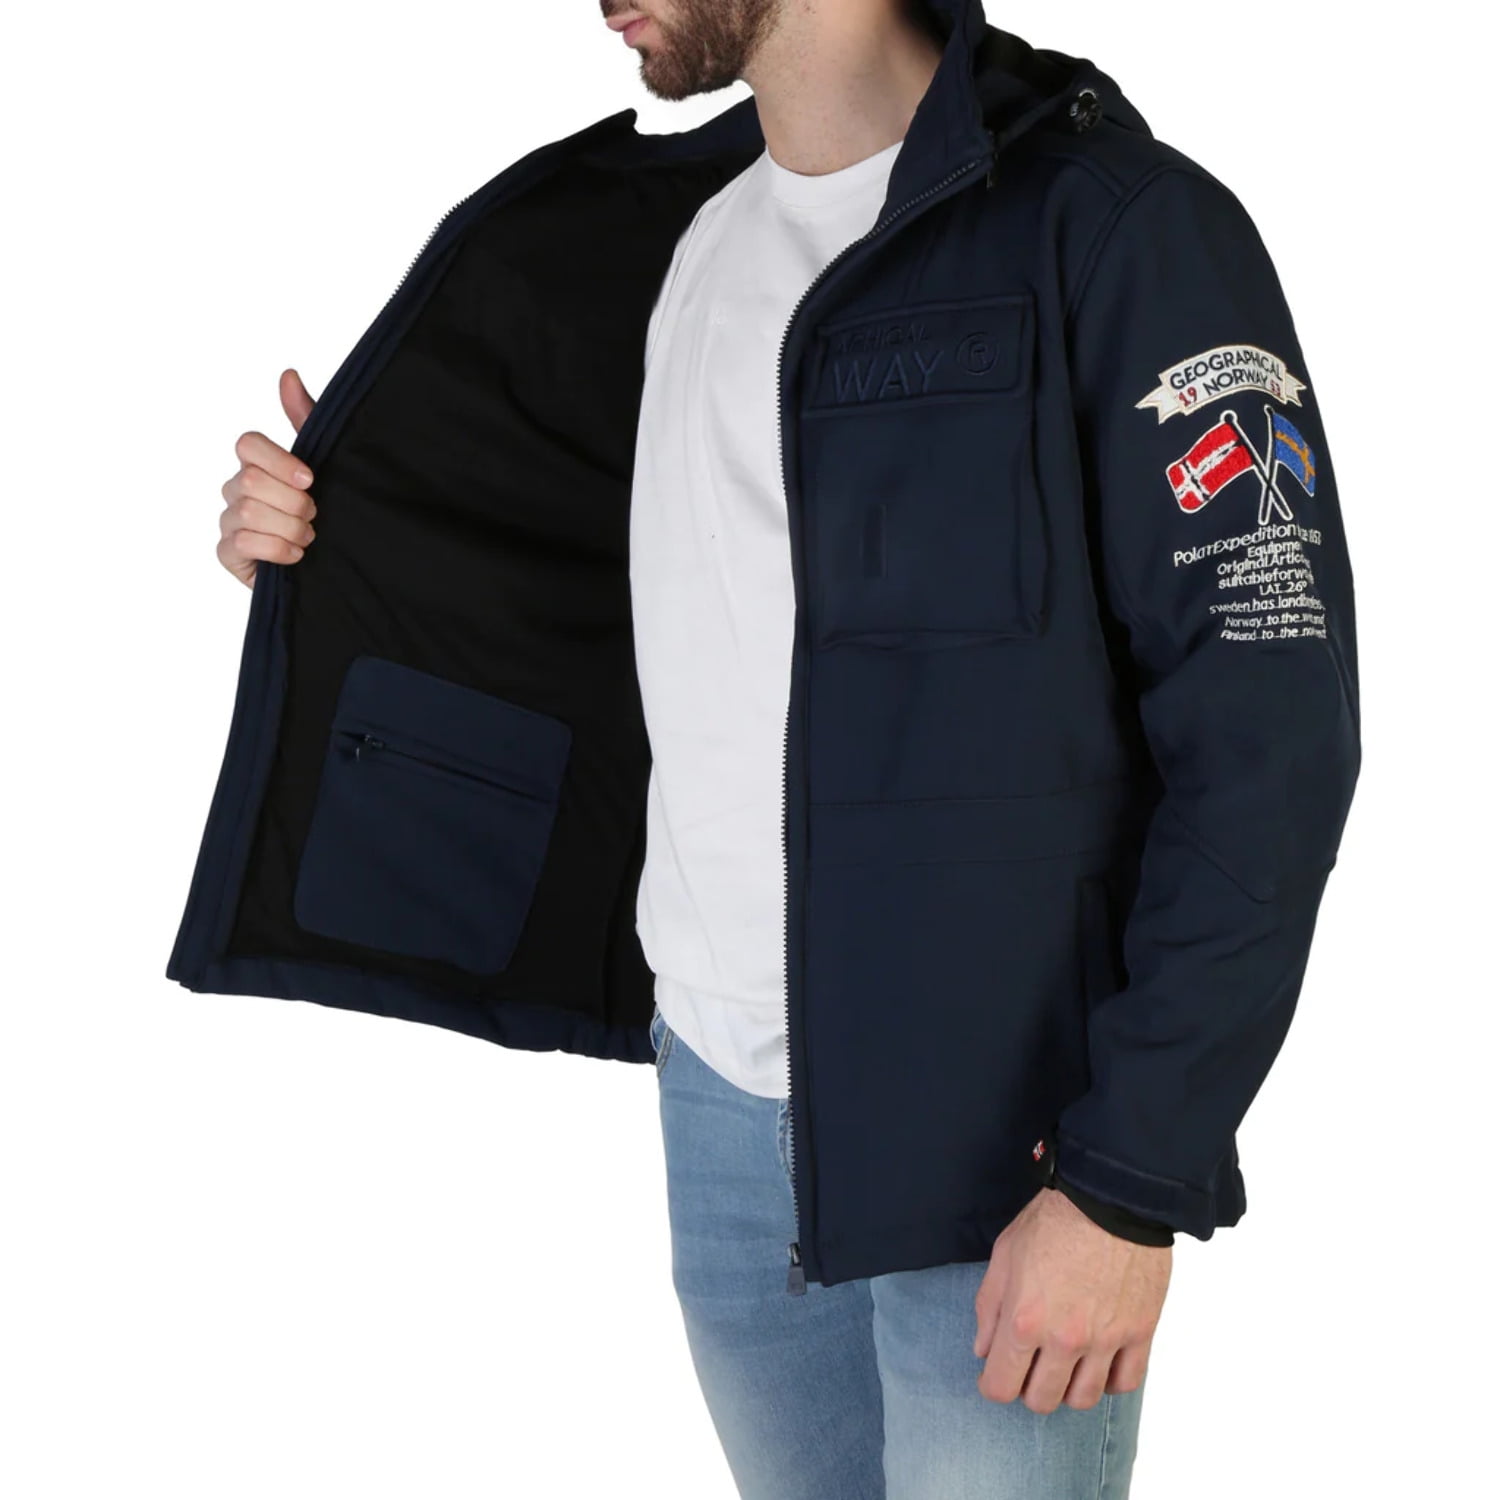 Geographical Norway Target-Zip_Man Outerwear Jacket Black